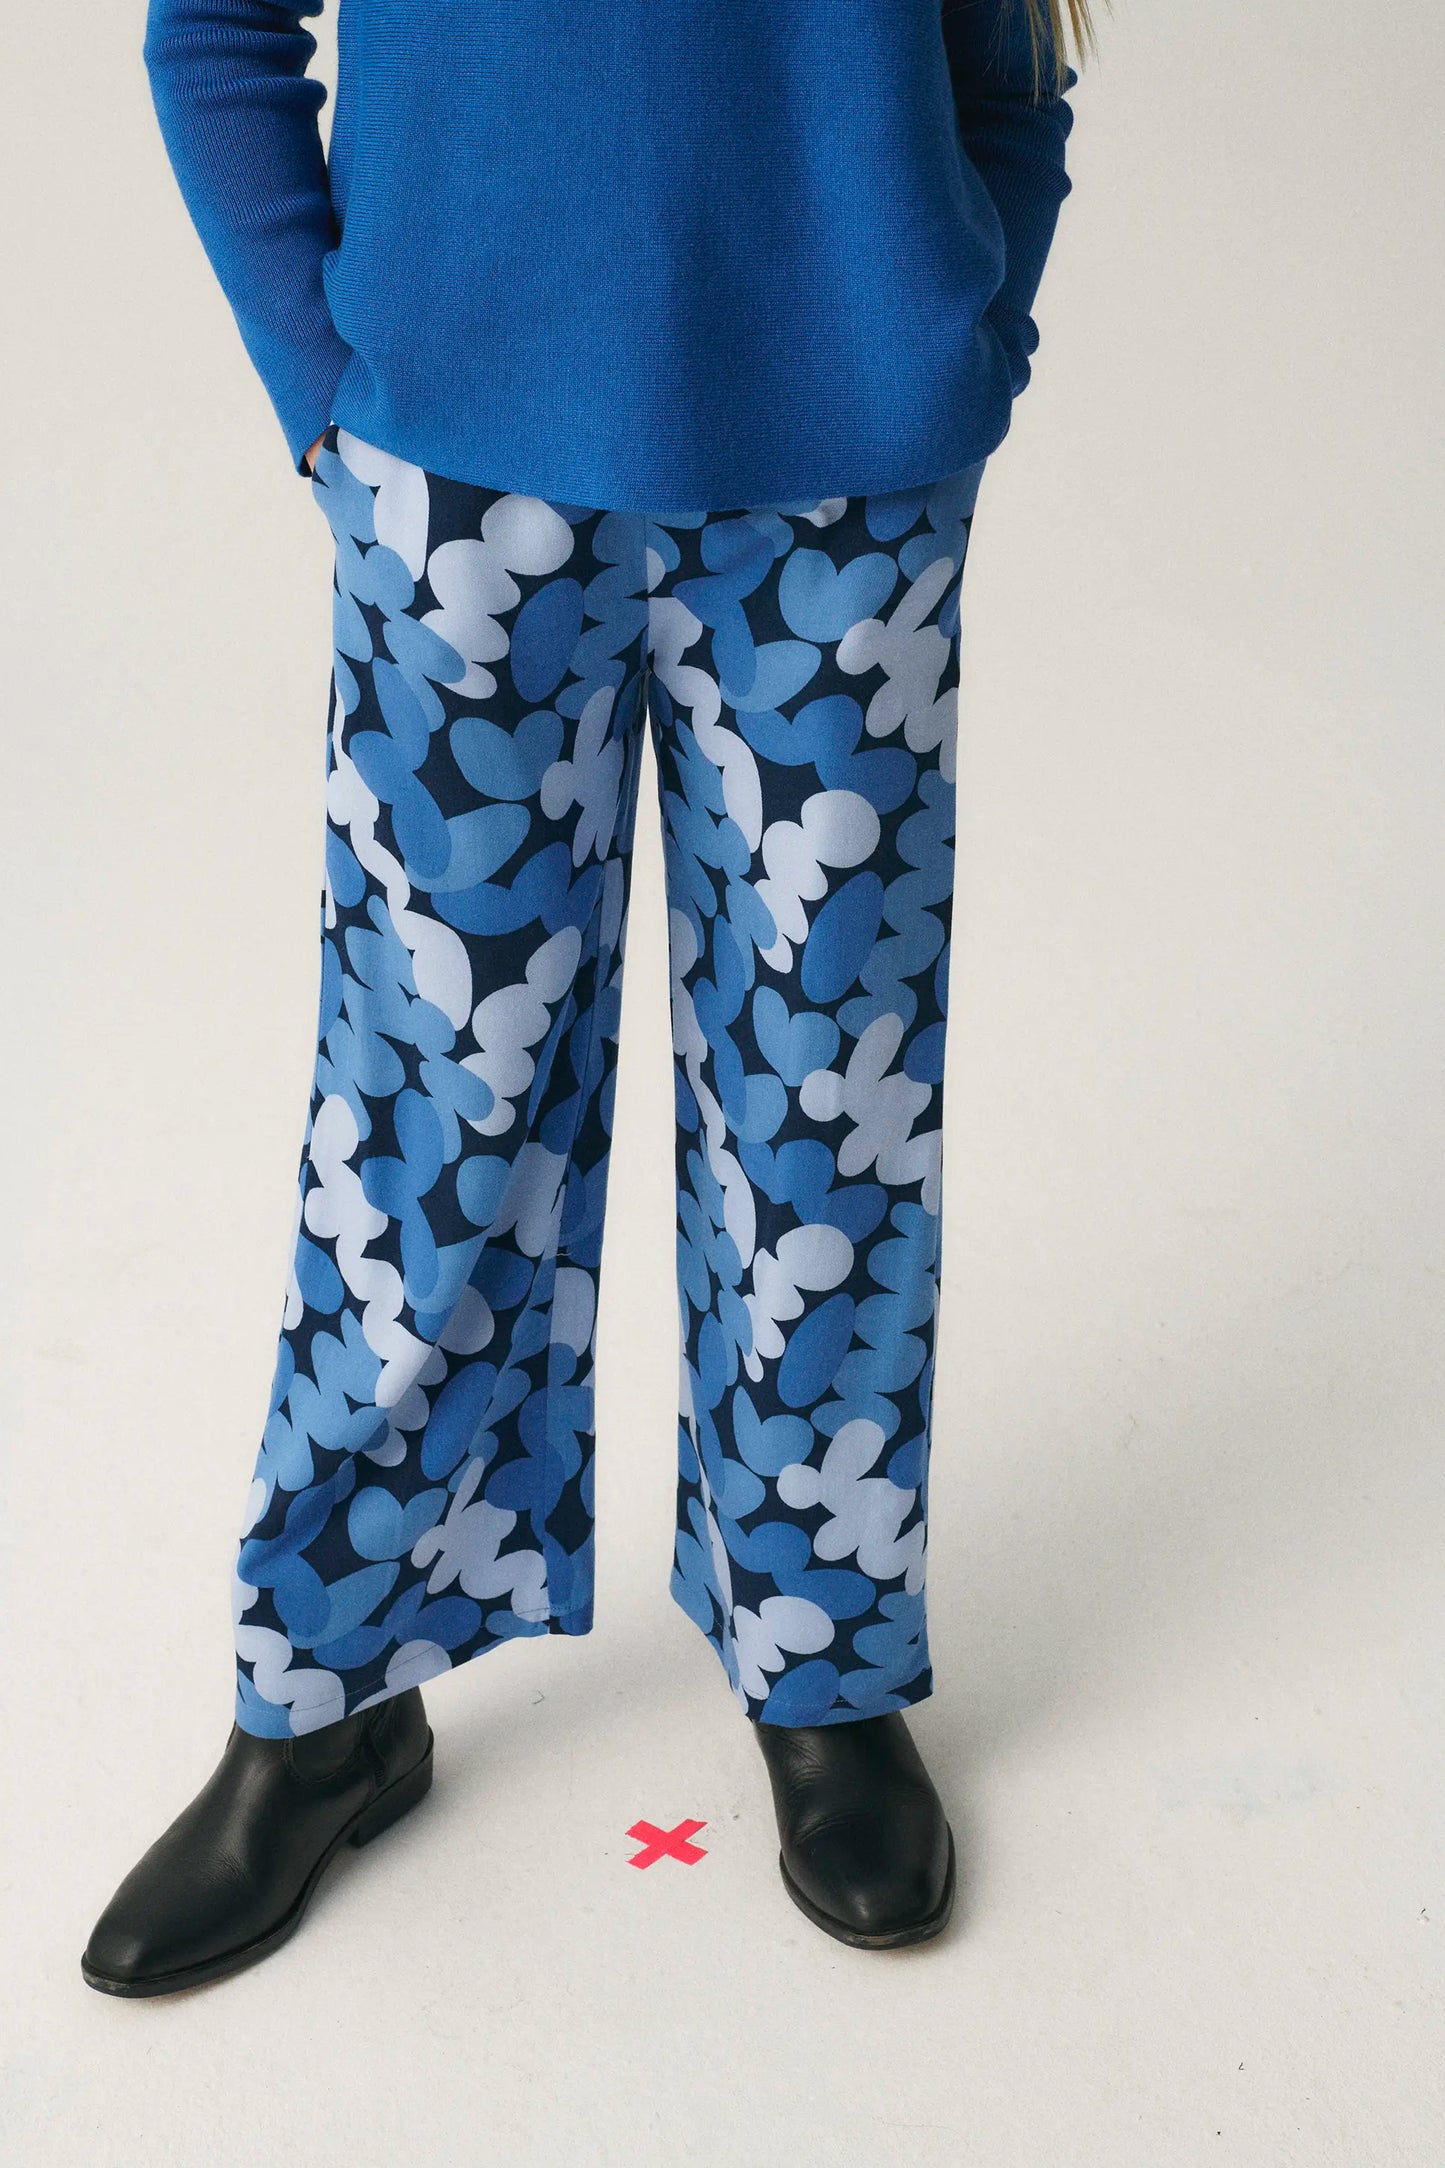 Pantalón largo unisex con estampado abstracto azul